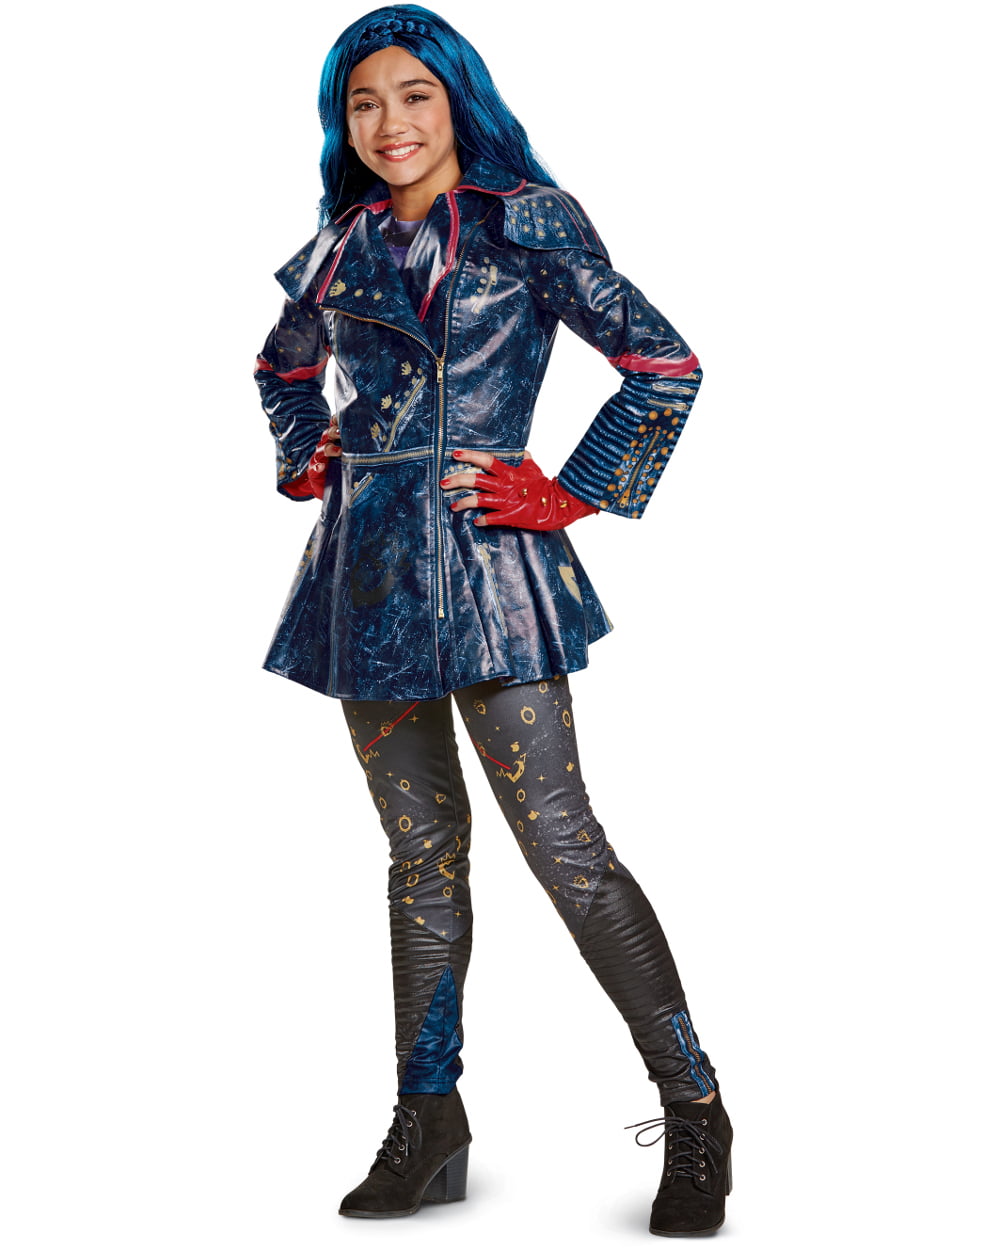 Childs Girl's Deluxe Disney Descendants 3 Evie Costume